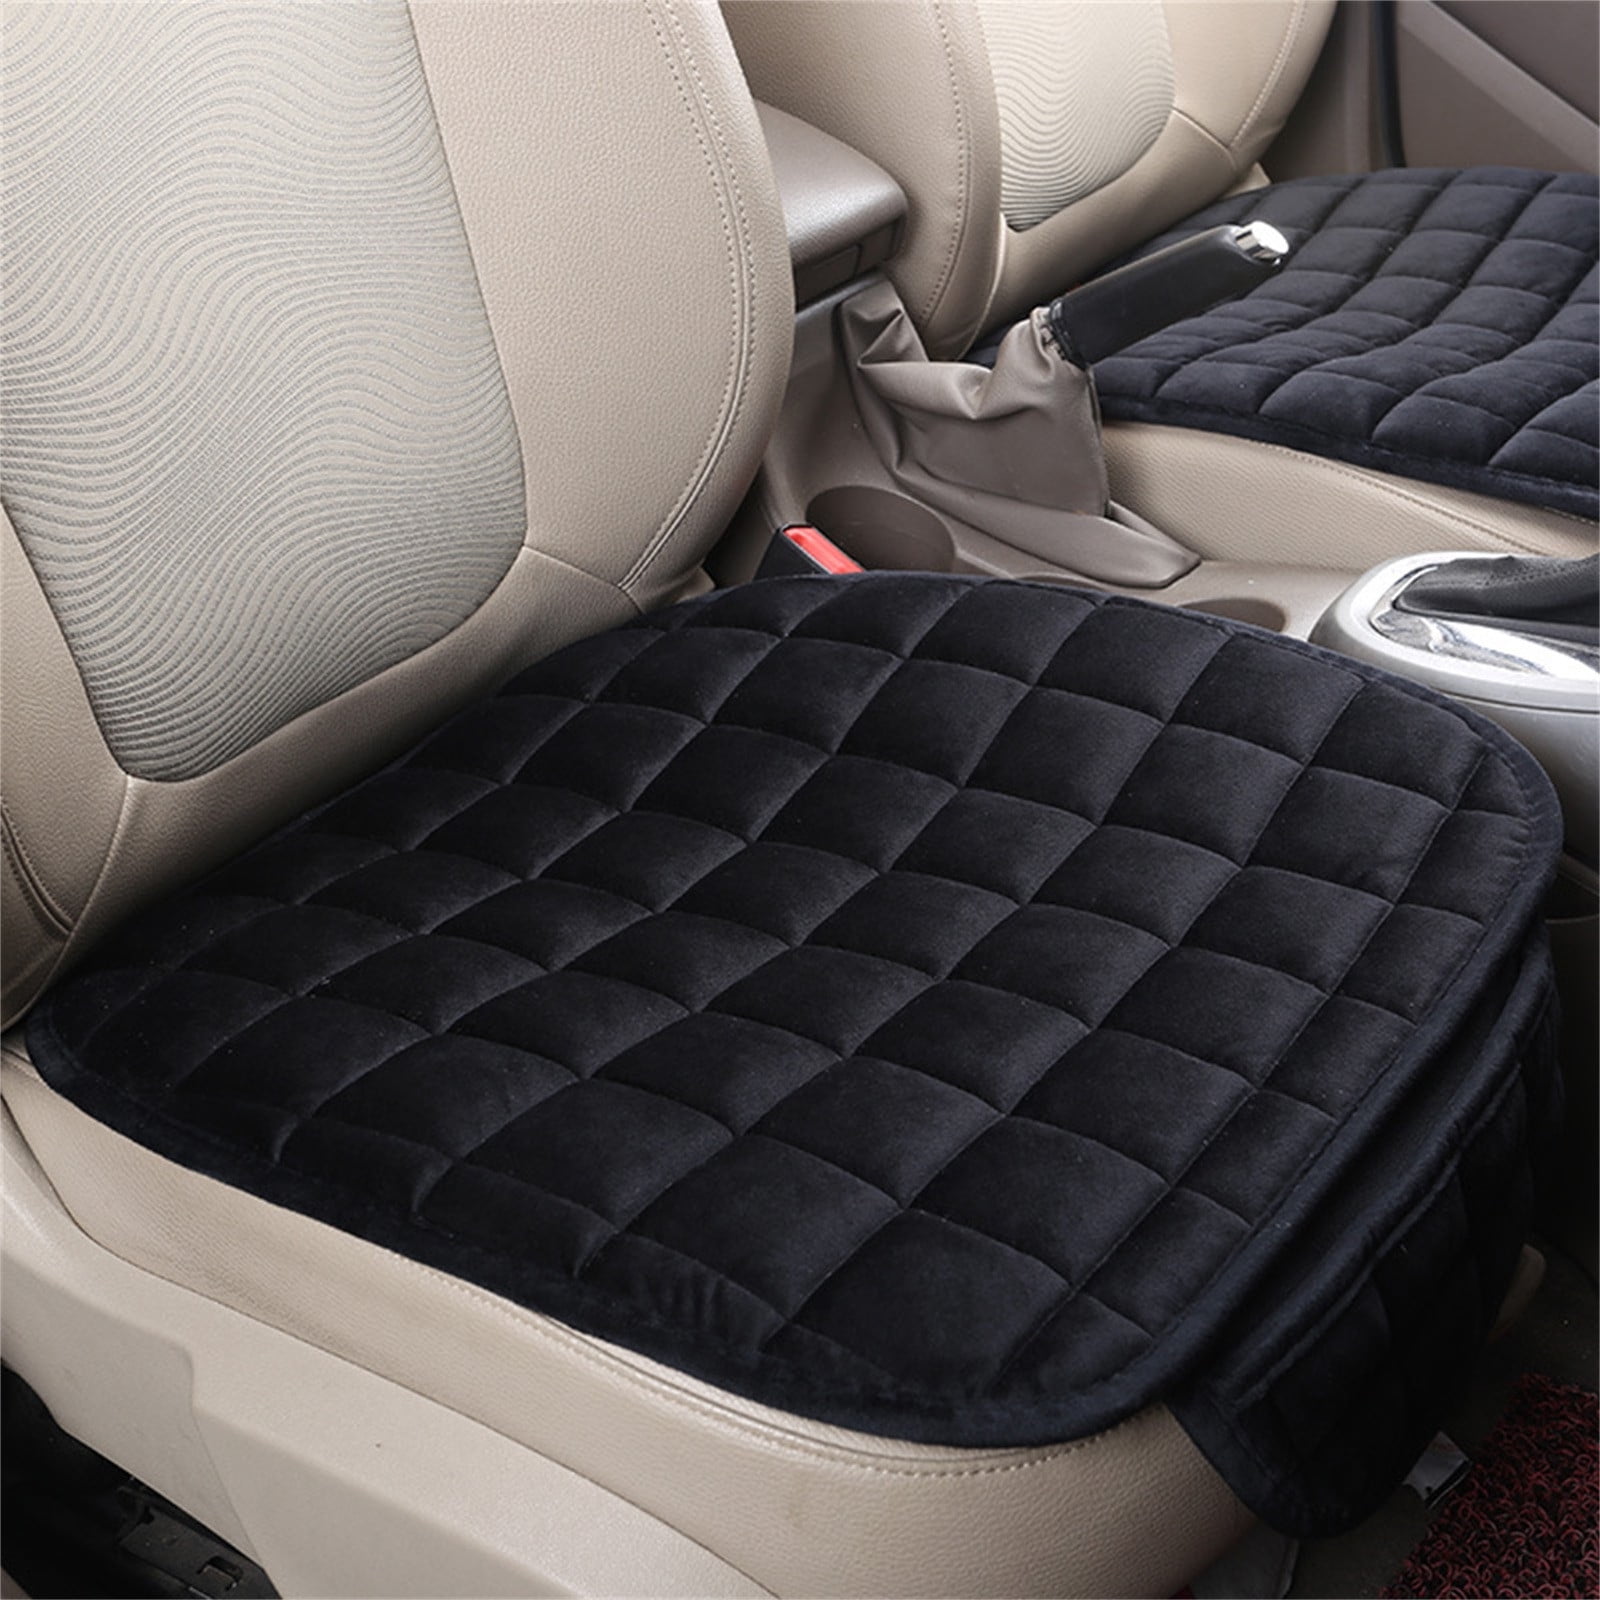 Ruibeauty Car Seat Cushion, Driver Seat Cushion With Comfort Memory Foam &  Non-Slip Rubber 